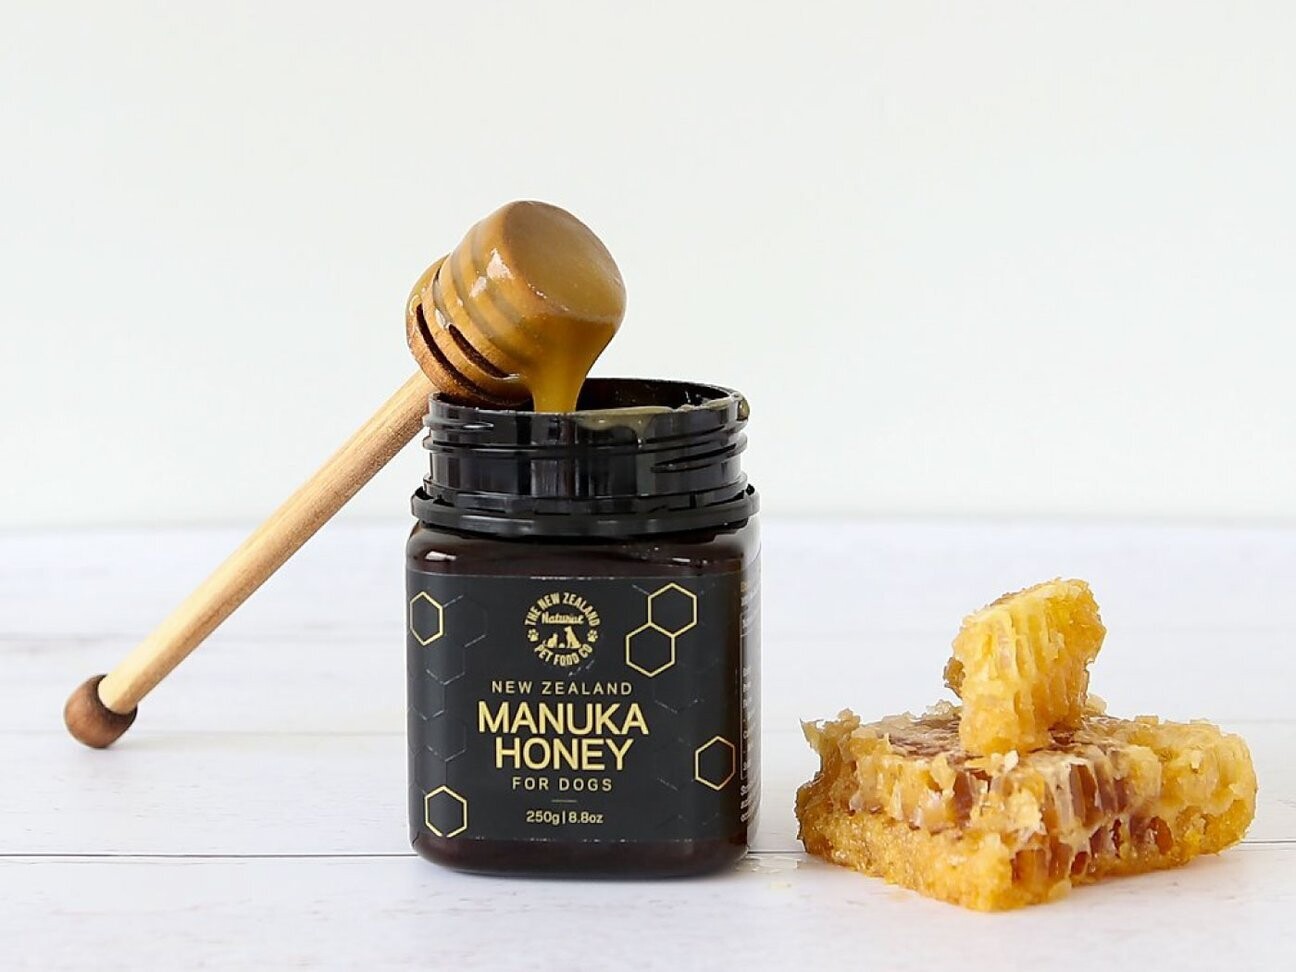 The NZ Natural Manuka Honey Dog Treats